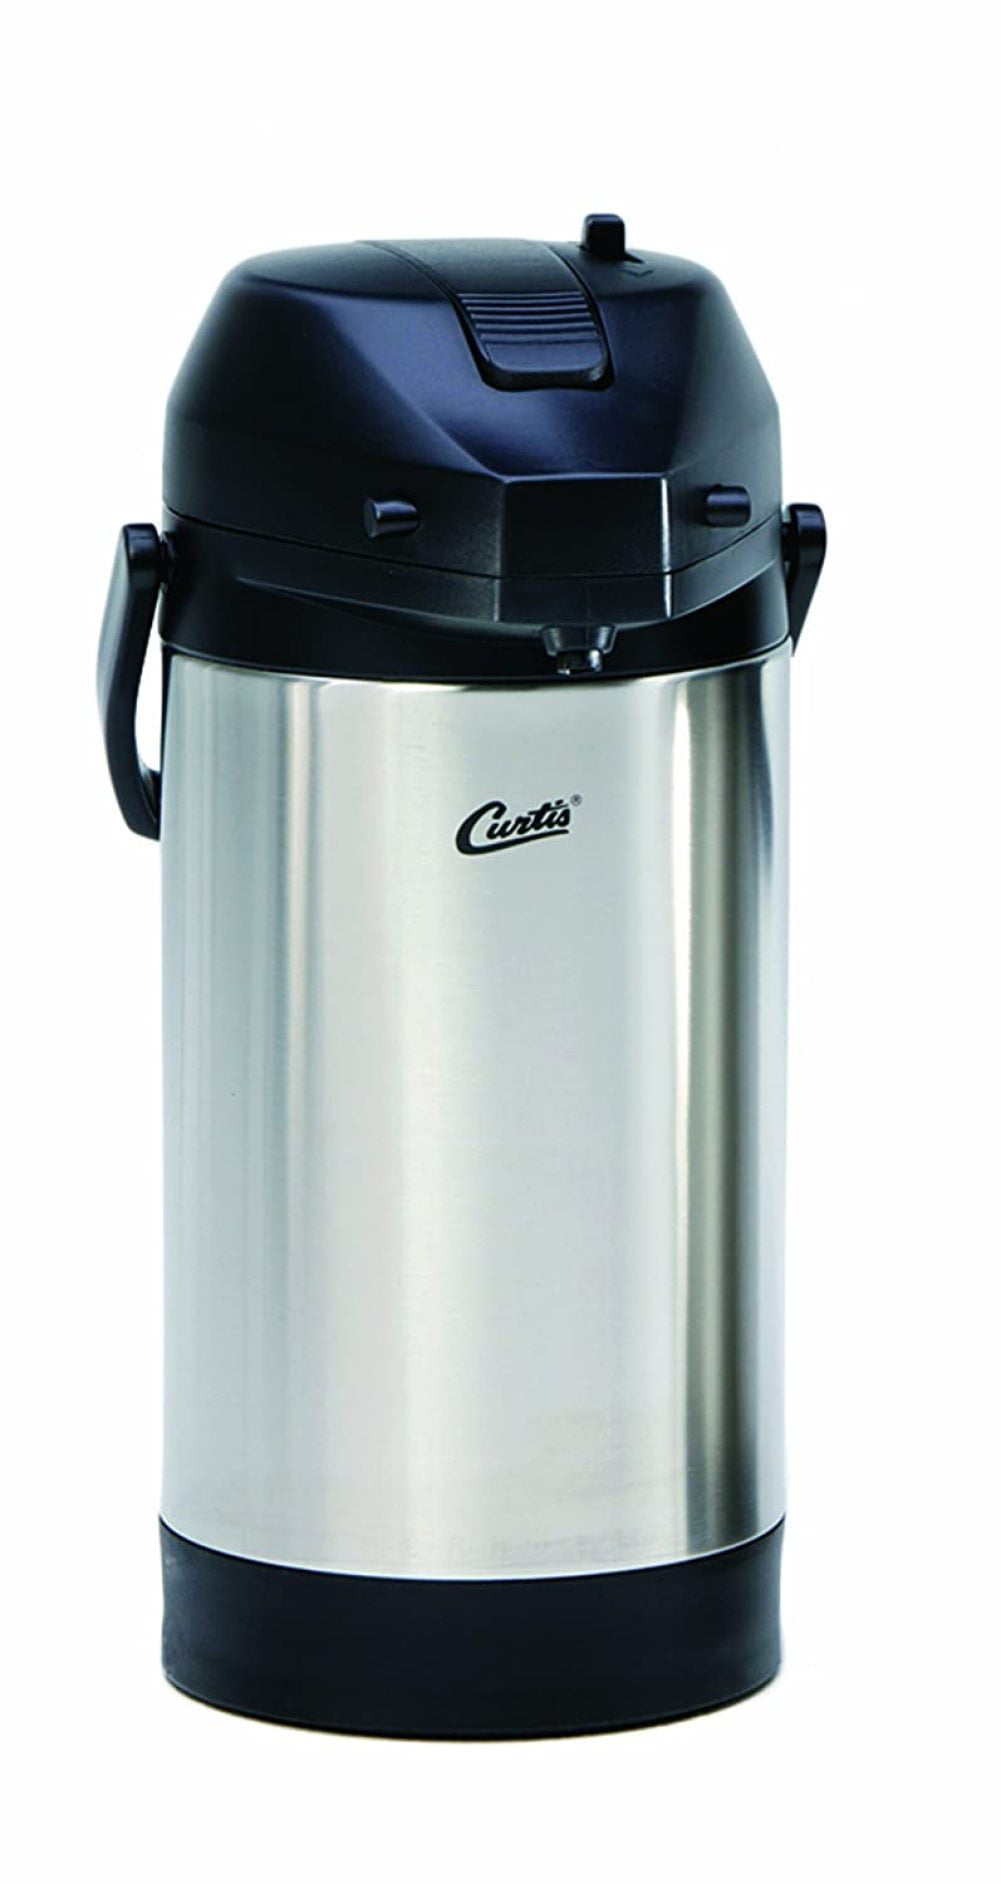 Each Wilbur Curtis Thermal Dispenser Pour Pot Commercial Airpot Pourpot Beverage Dispenser 1.9L S.S TLXP1901S000 Body S.S Liner Brew Thru Tall 